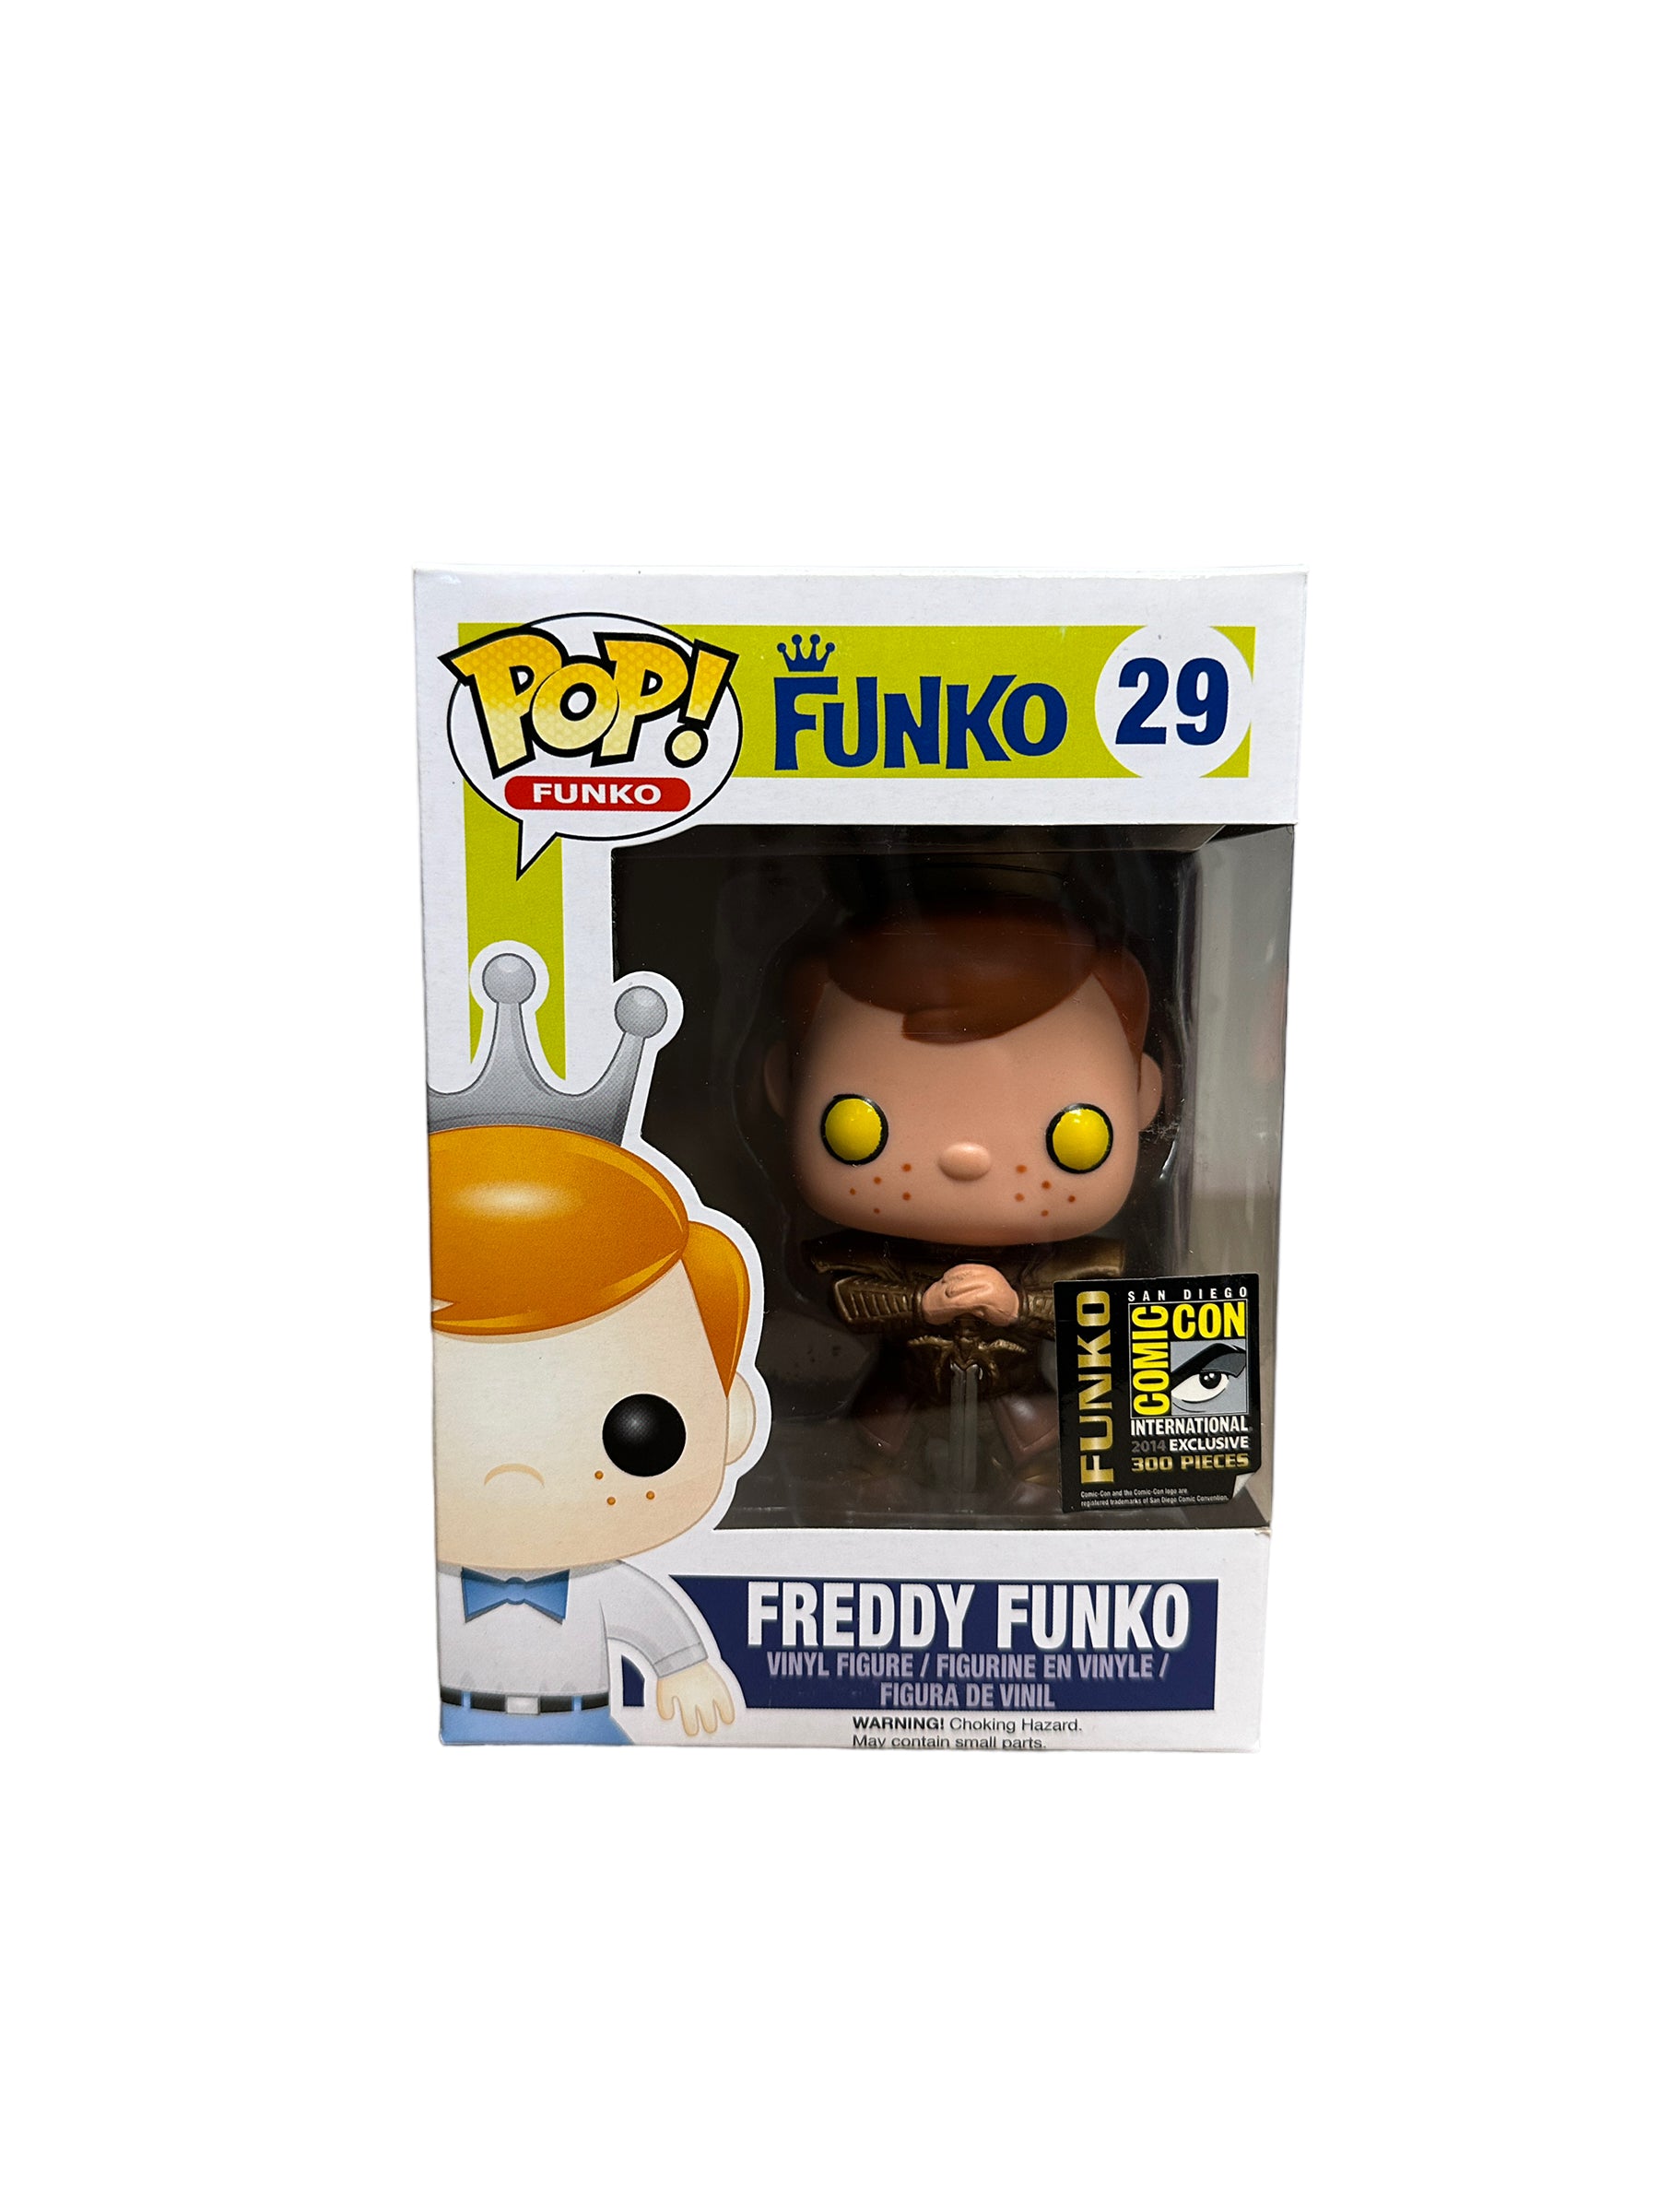 Freddy Funko as Heimdall #29 Funko Pop! - SDCC 2014 Exclusive LE300 Pcs - Condition 8/10